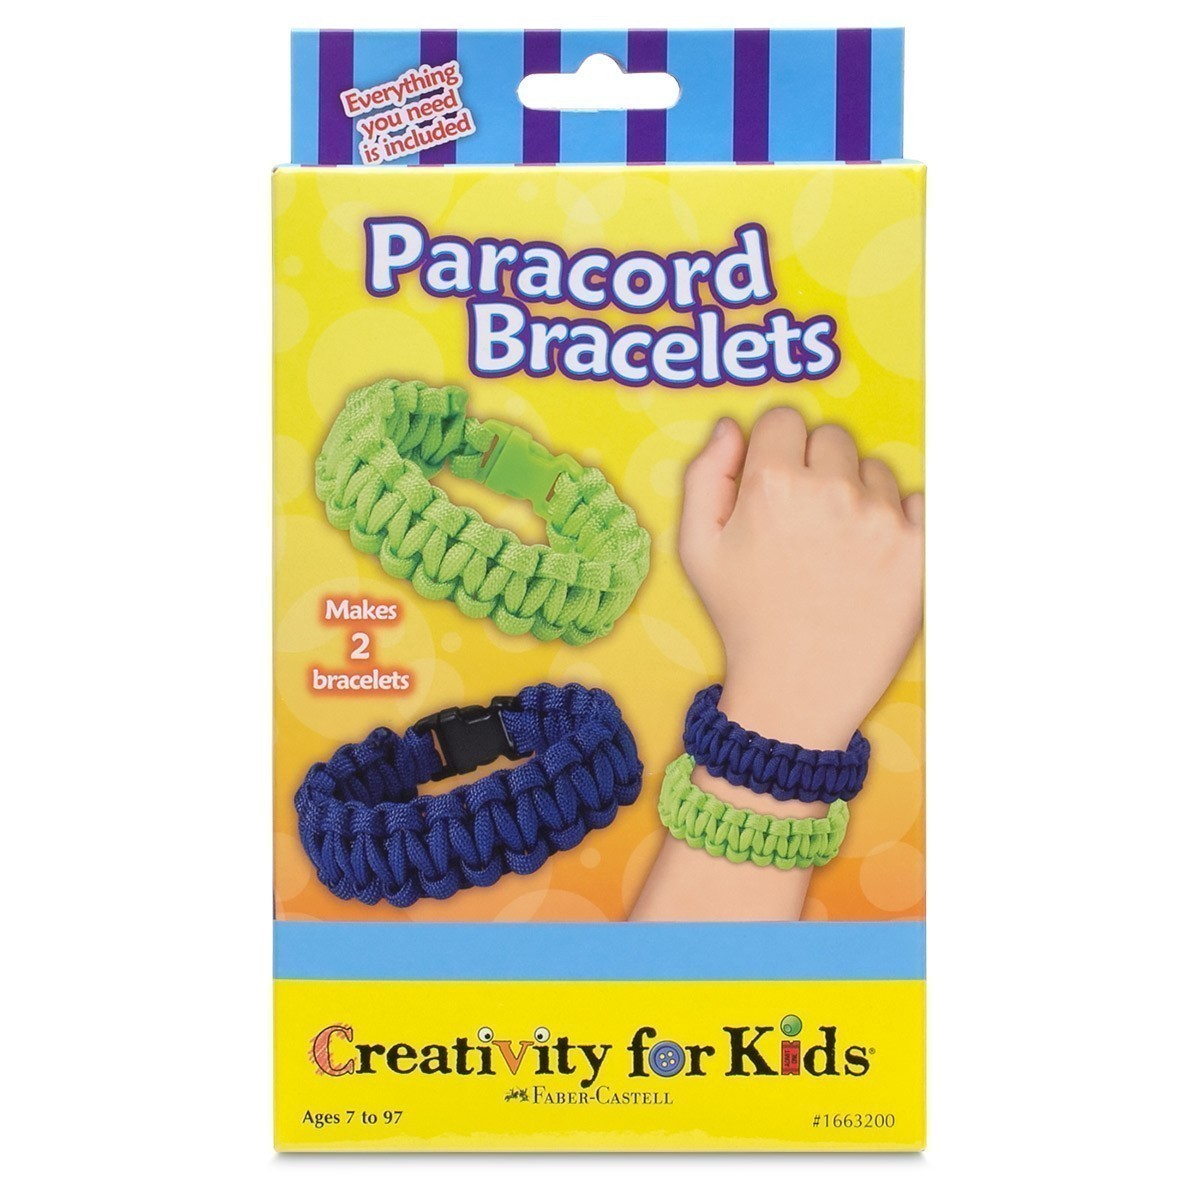 Creativity for Kids - Paracord Bracelets